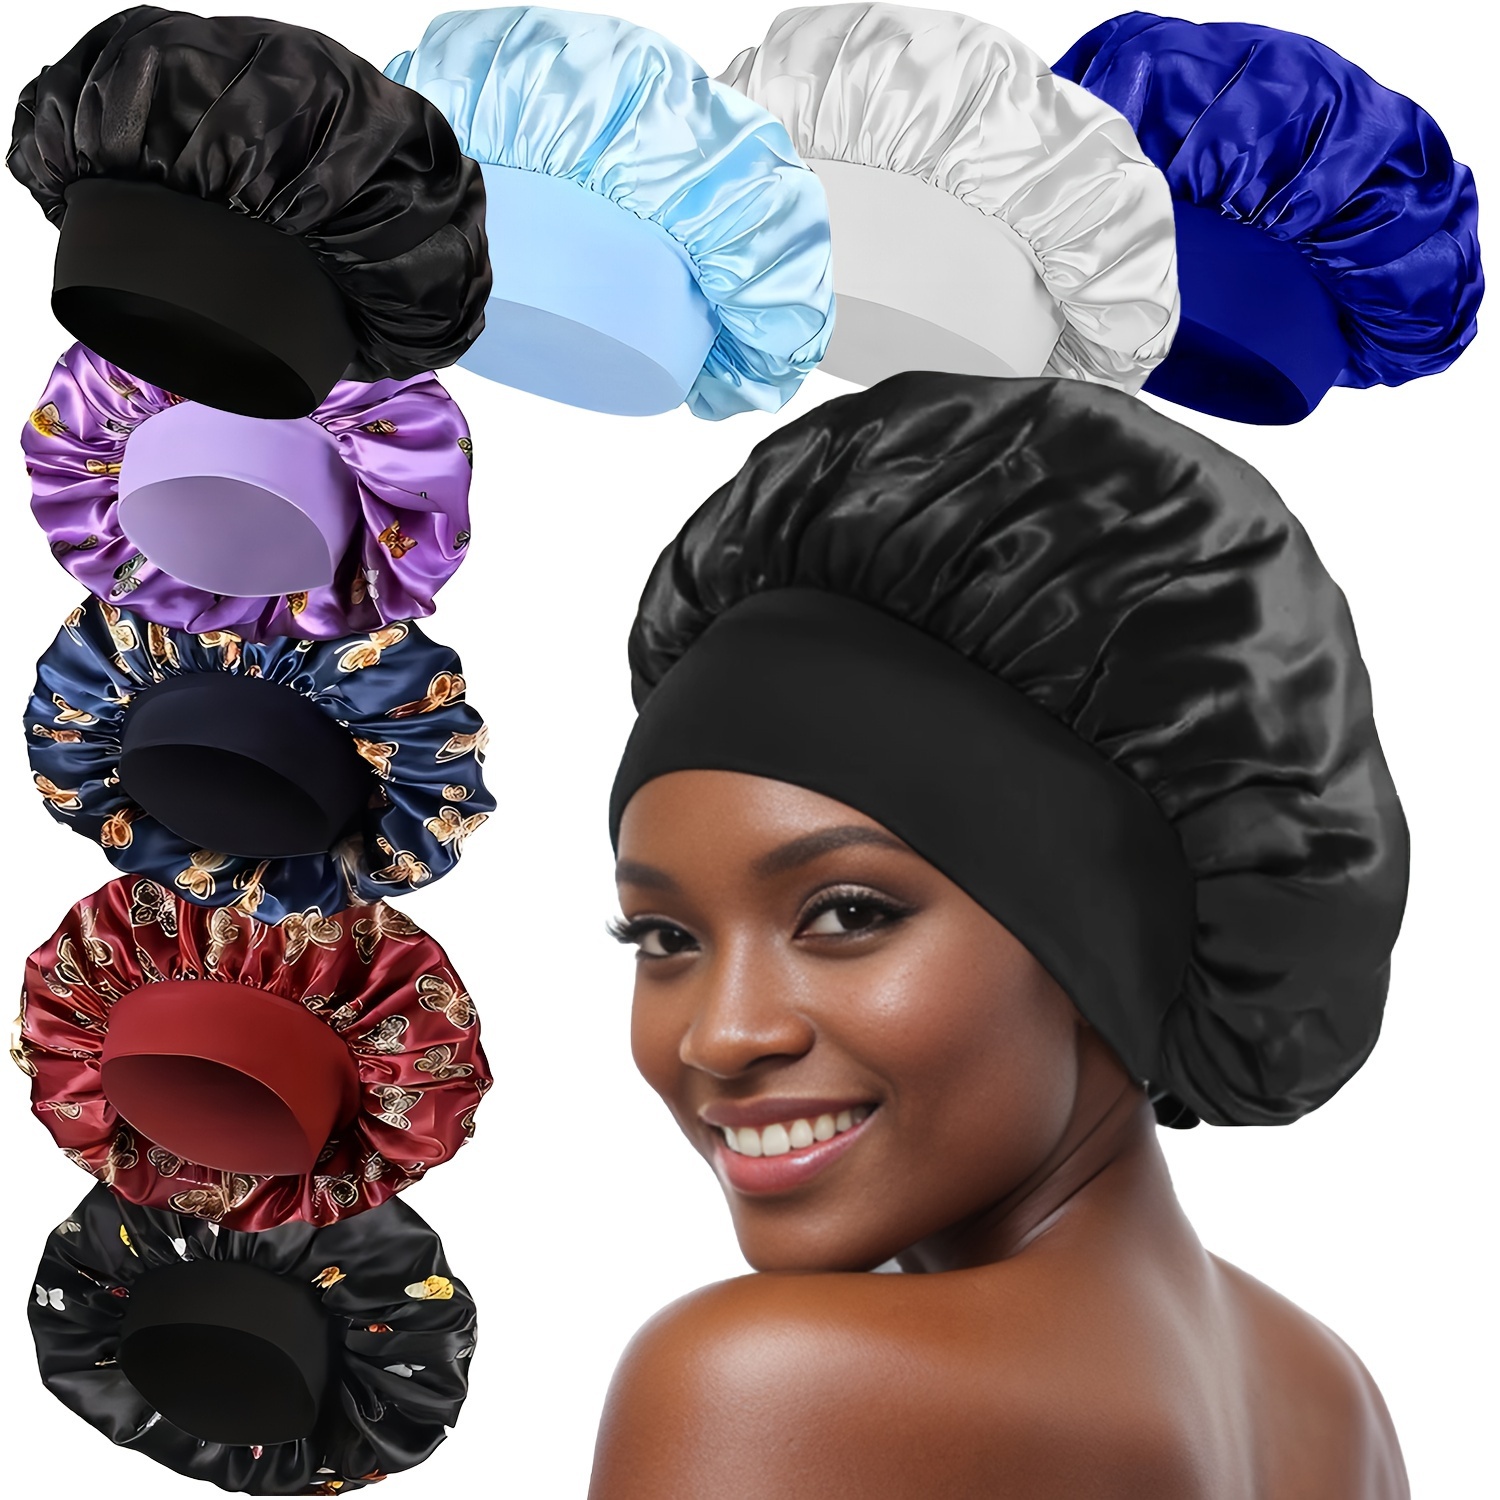 

8pcs Silky Satin Bonnet Reusable Elastic Wide Band Shower Cap Sleep Cap Hair Protection Cap For Women Curly Hair Natural Hair